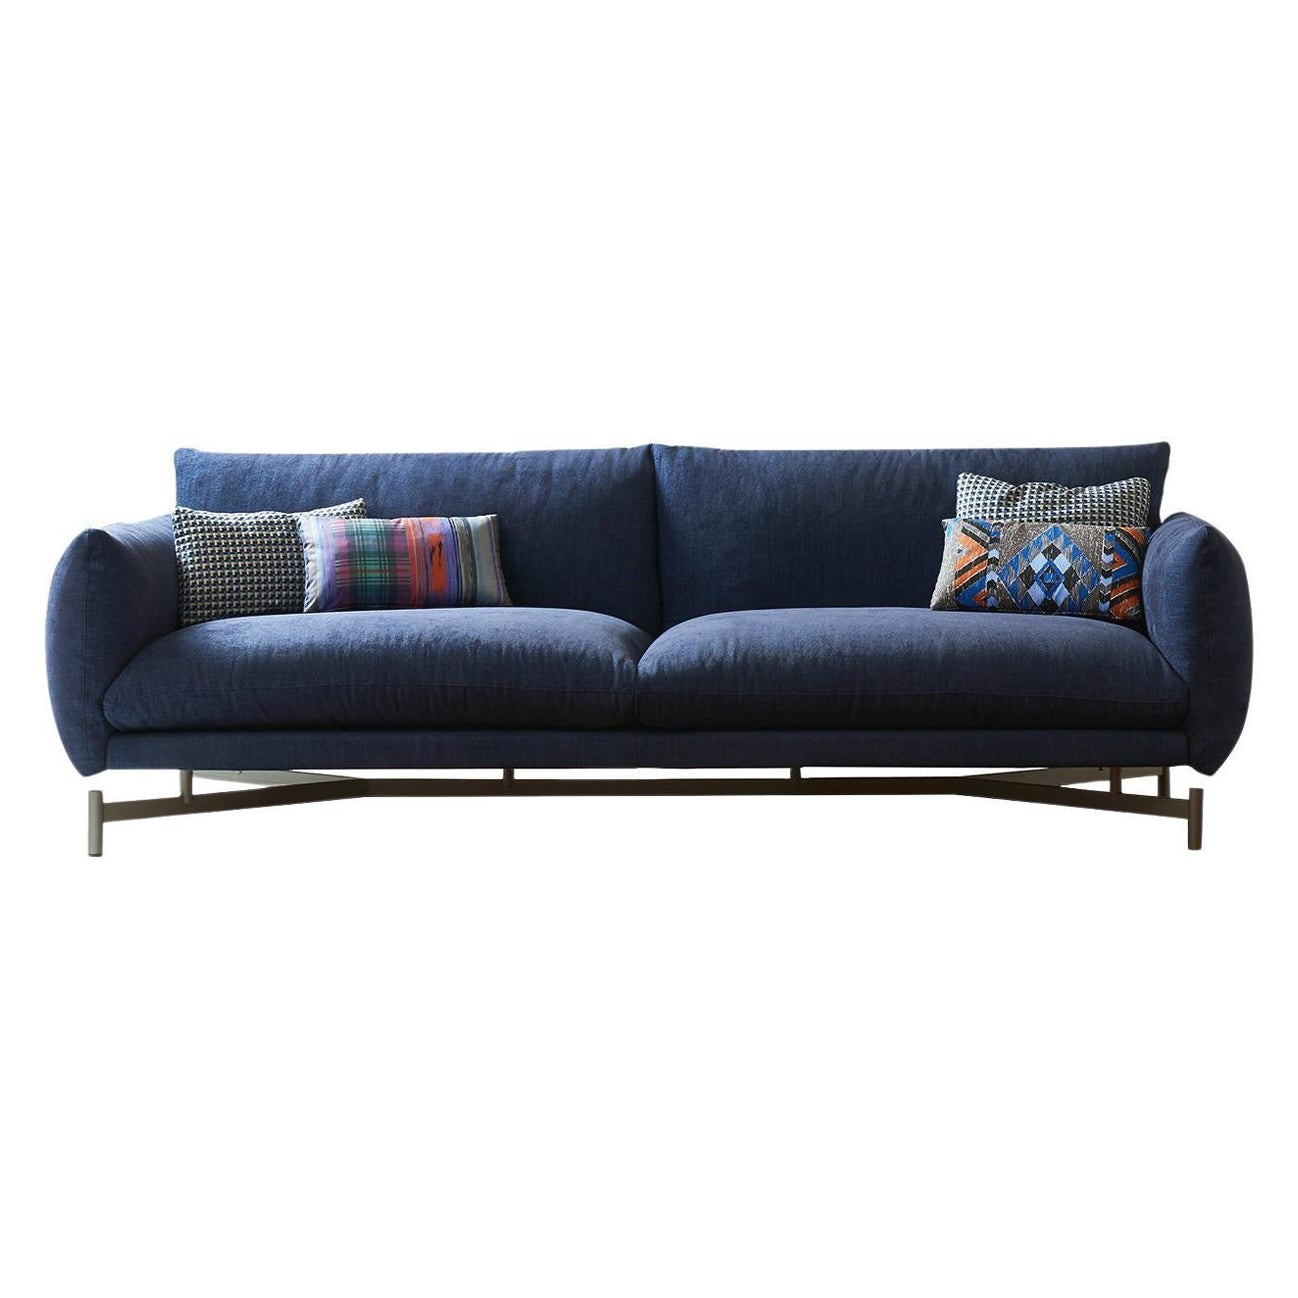 Koa Blue Sofa by Angeletti Ruzza